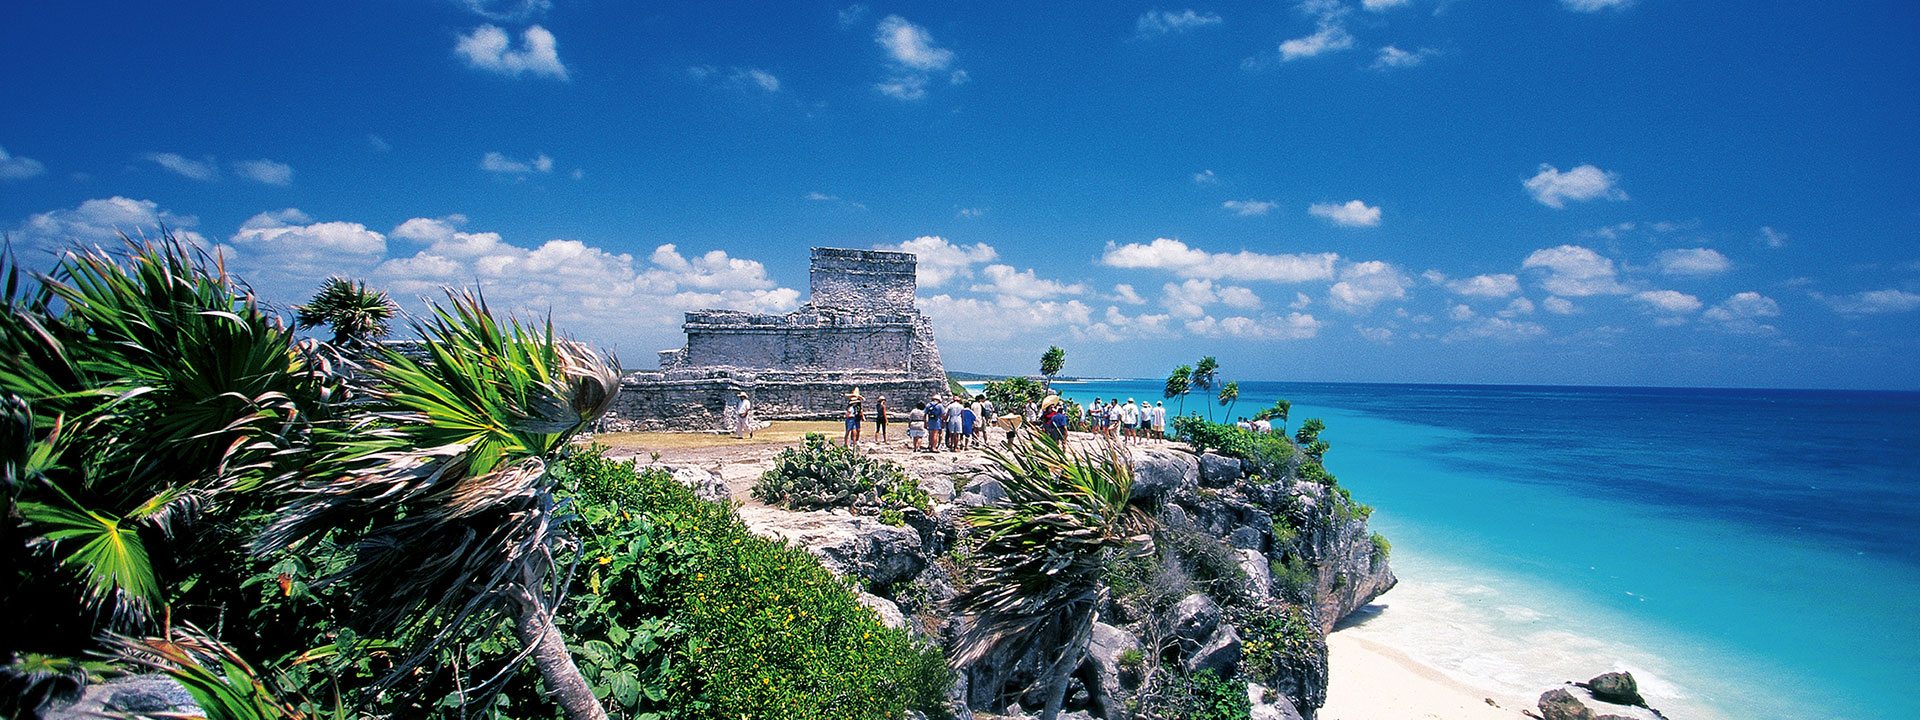 Holidays to The Yucatan Peninsula - Top Travel Tips